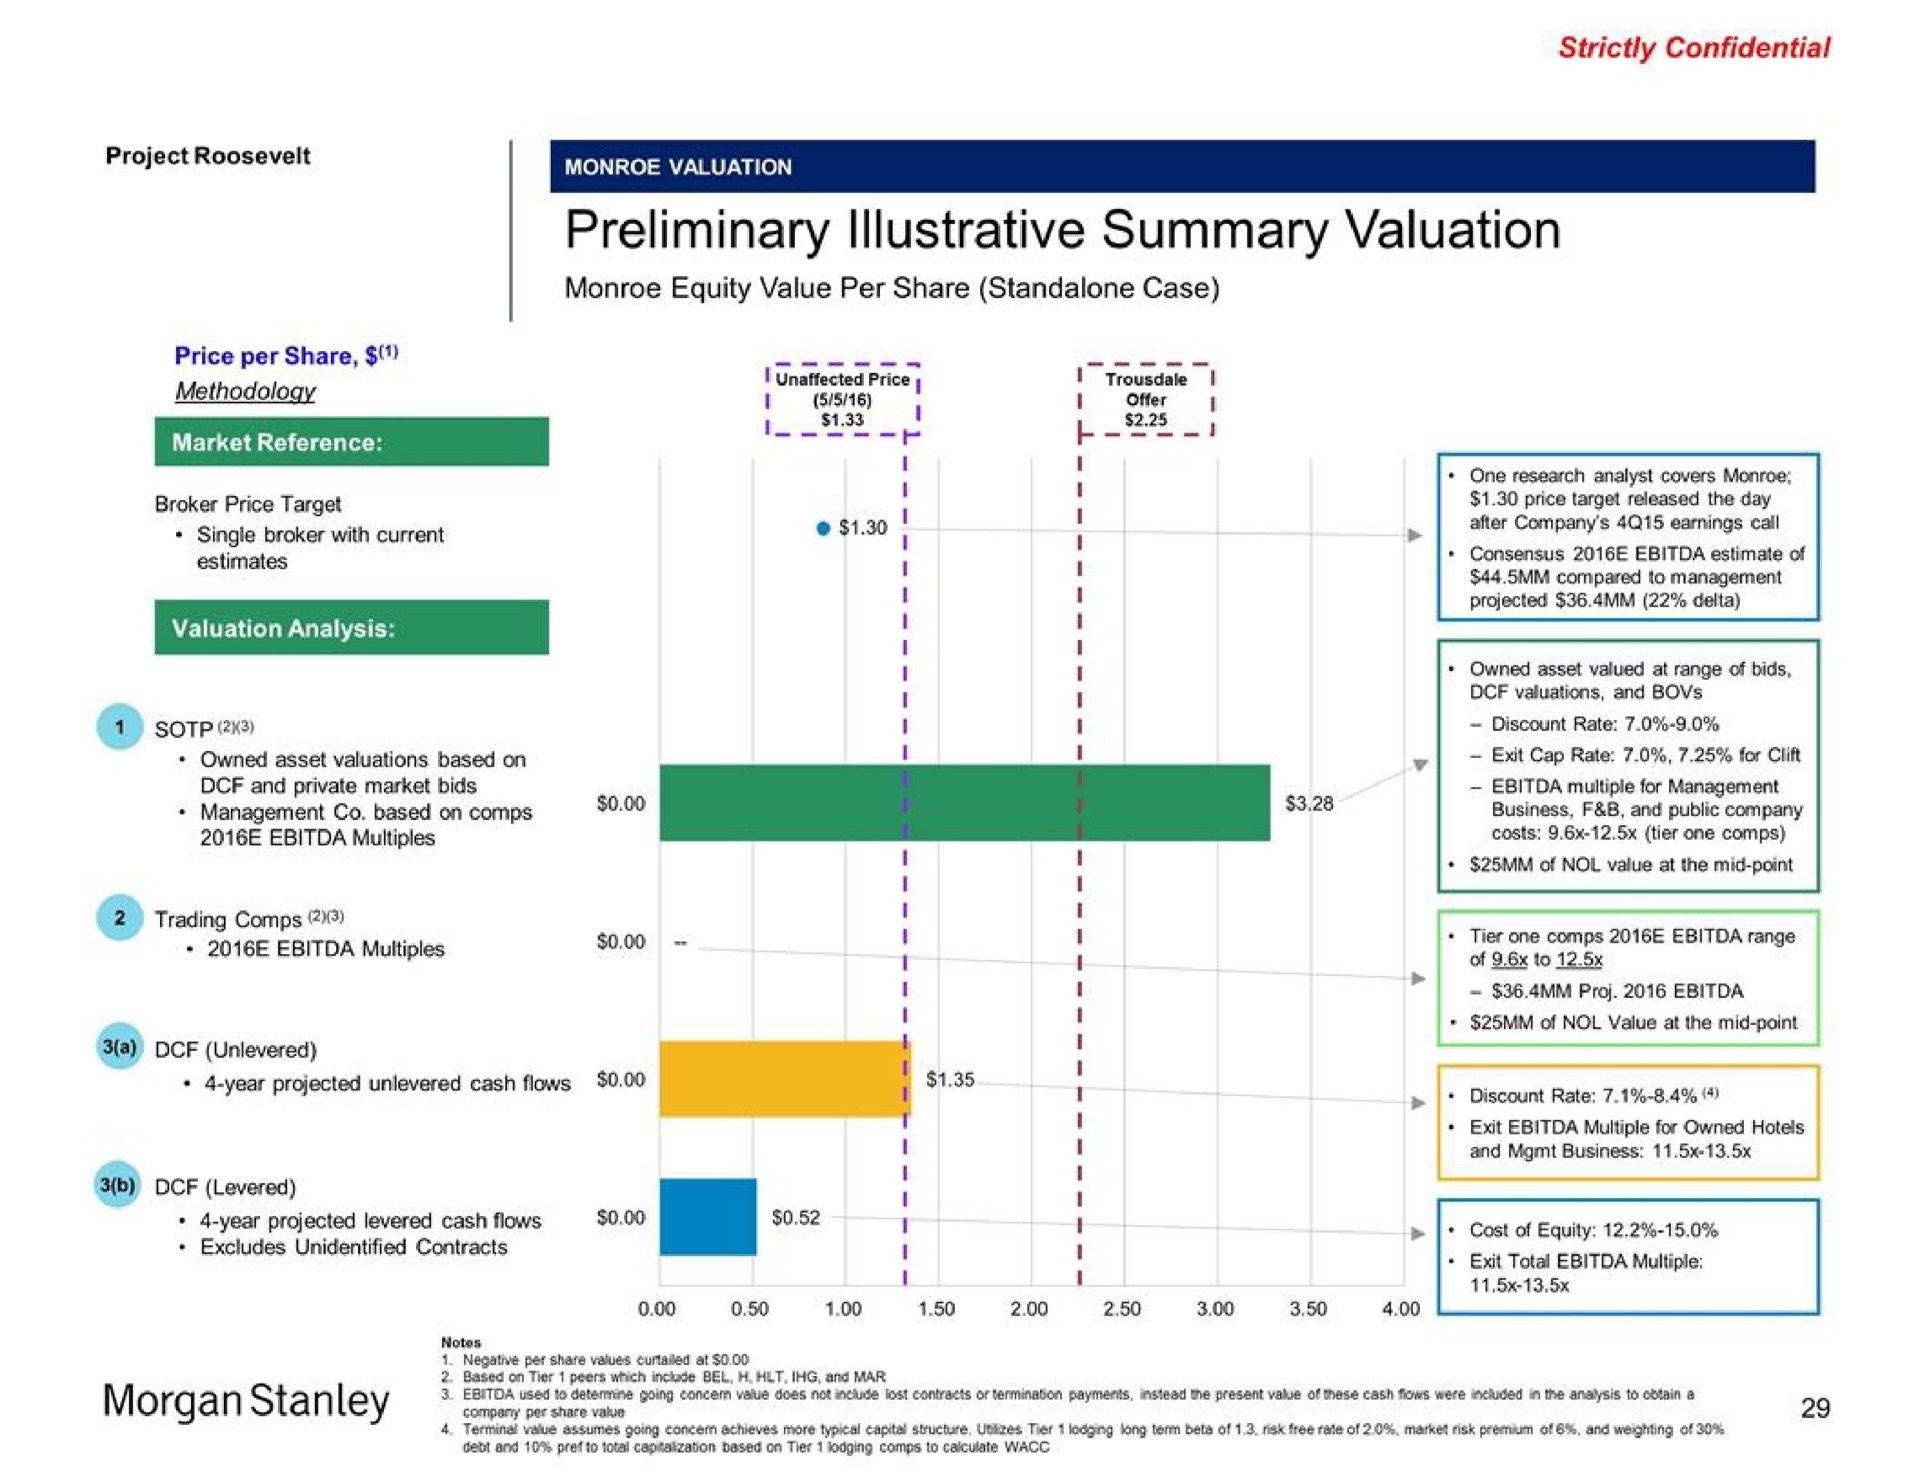 preliminary illustrative summary valuation in | Morgan Stanley